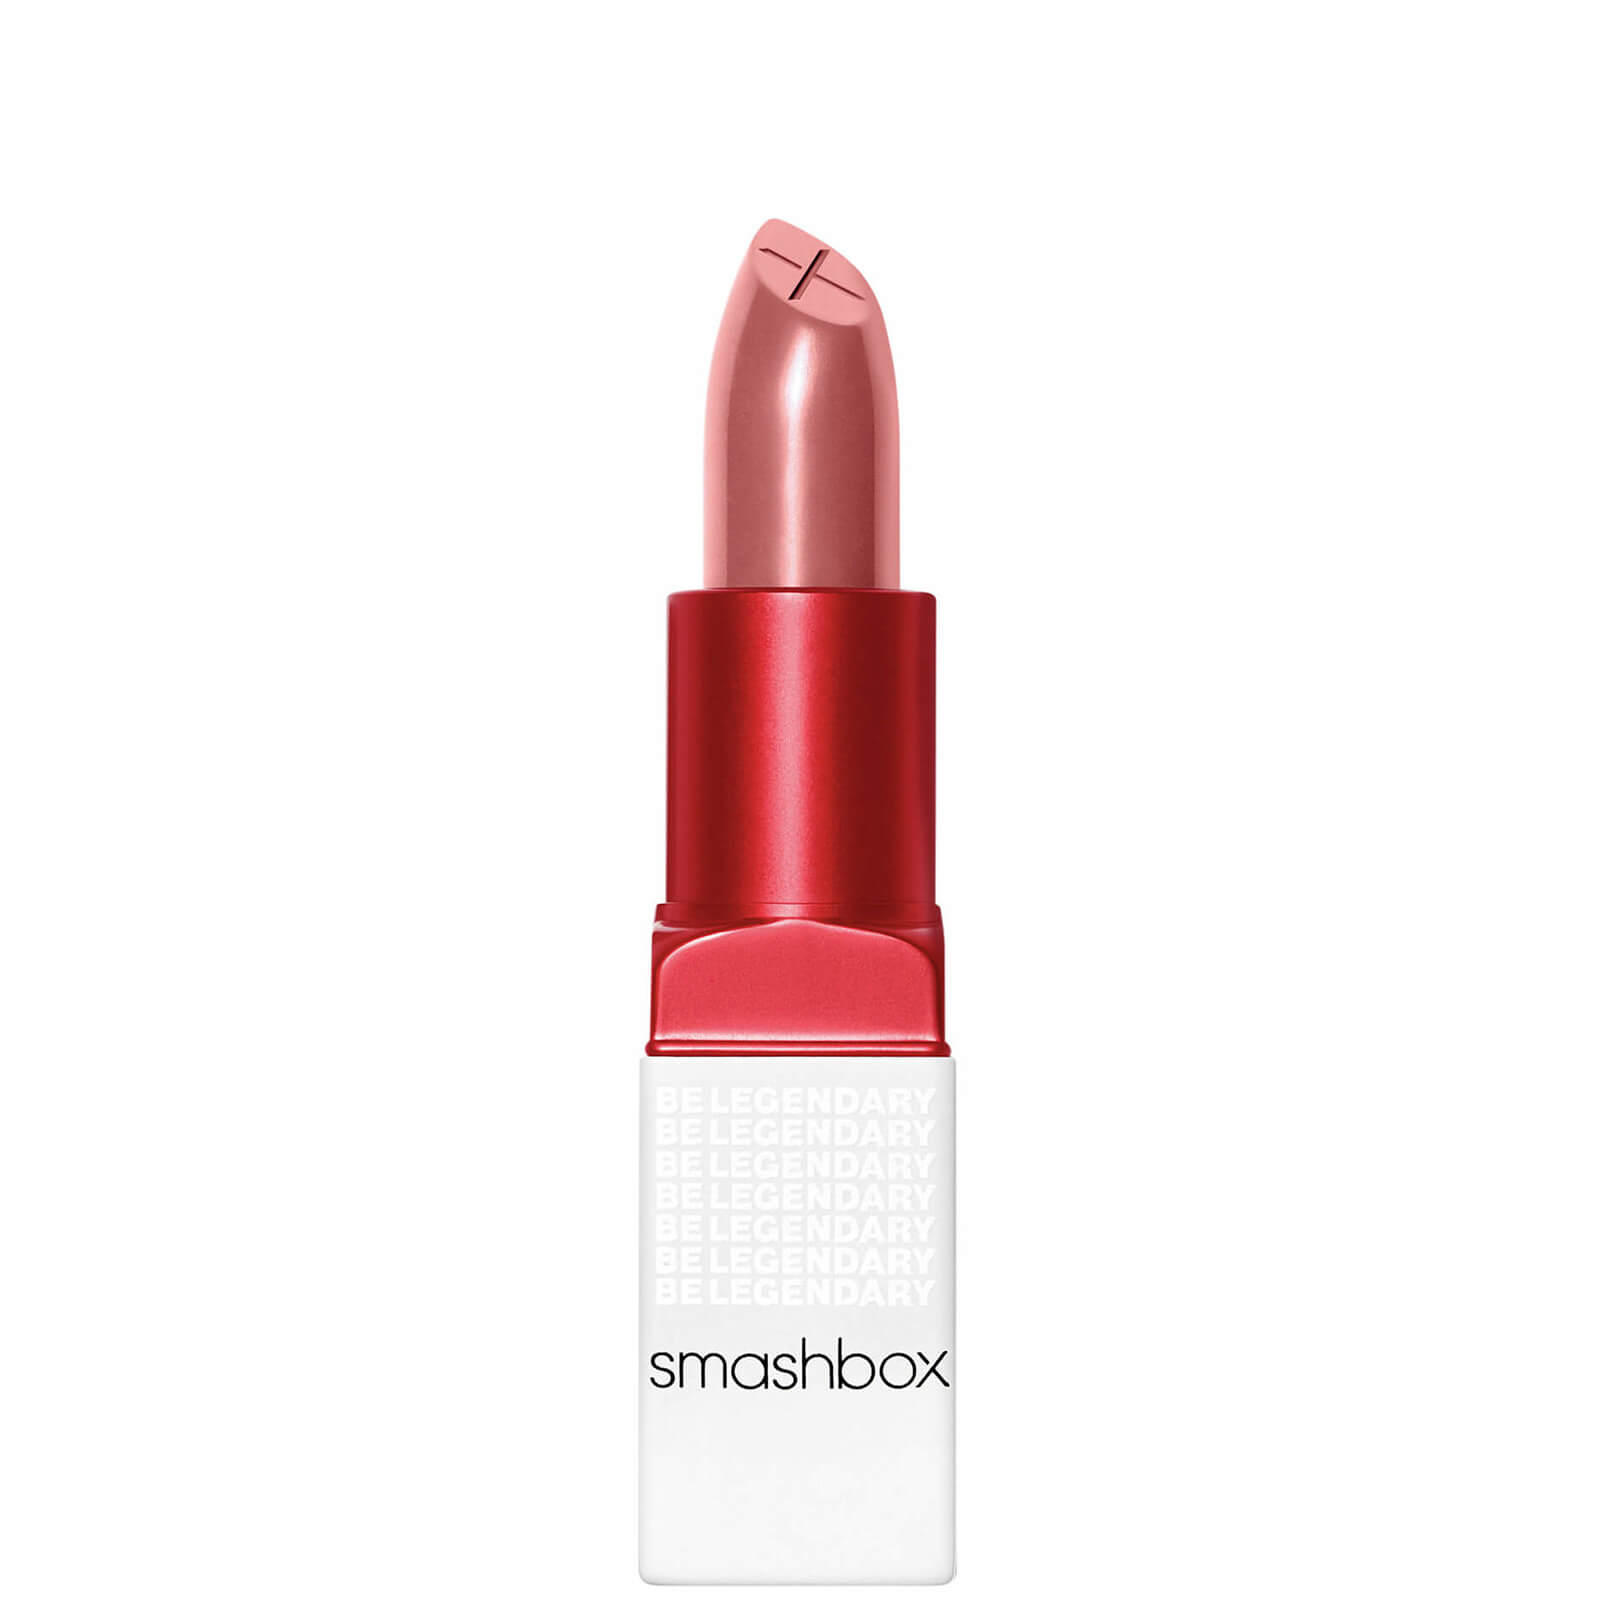 Smashbox Be Legendary Prime and Plush Lipstick 3.4g (Various Shades) - Deep Brick Red